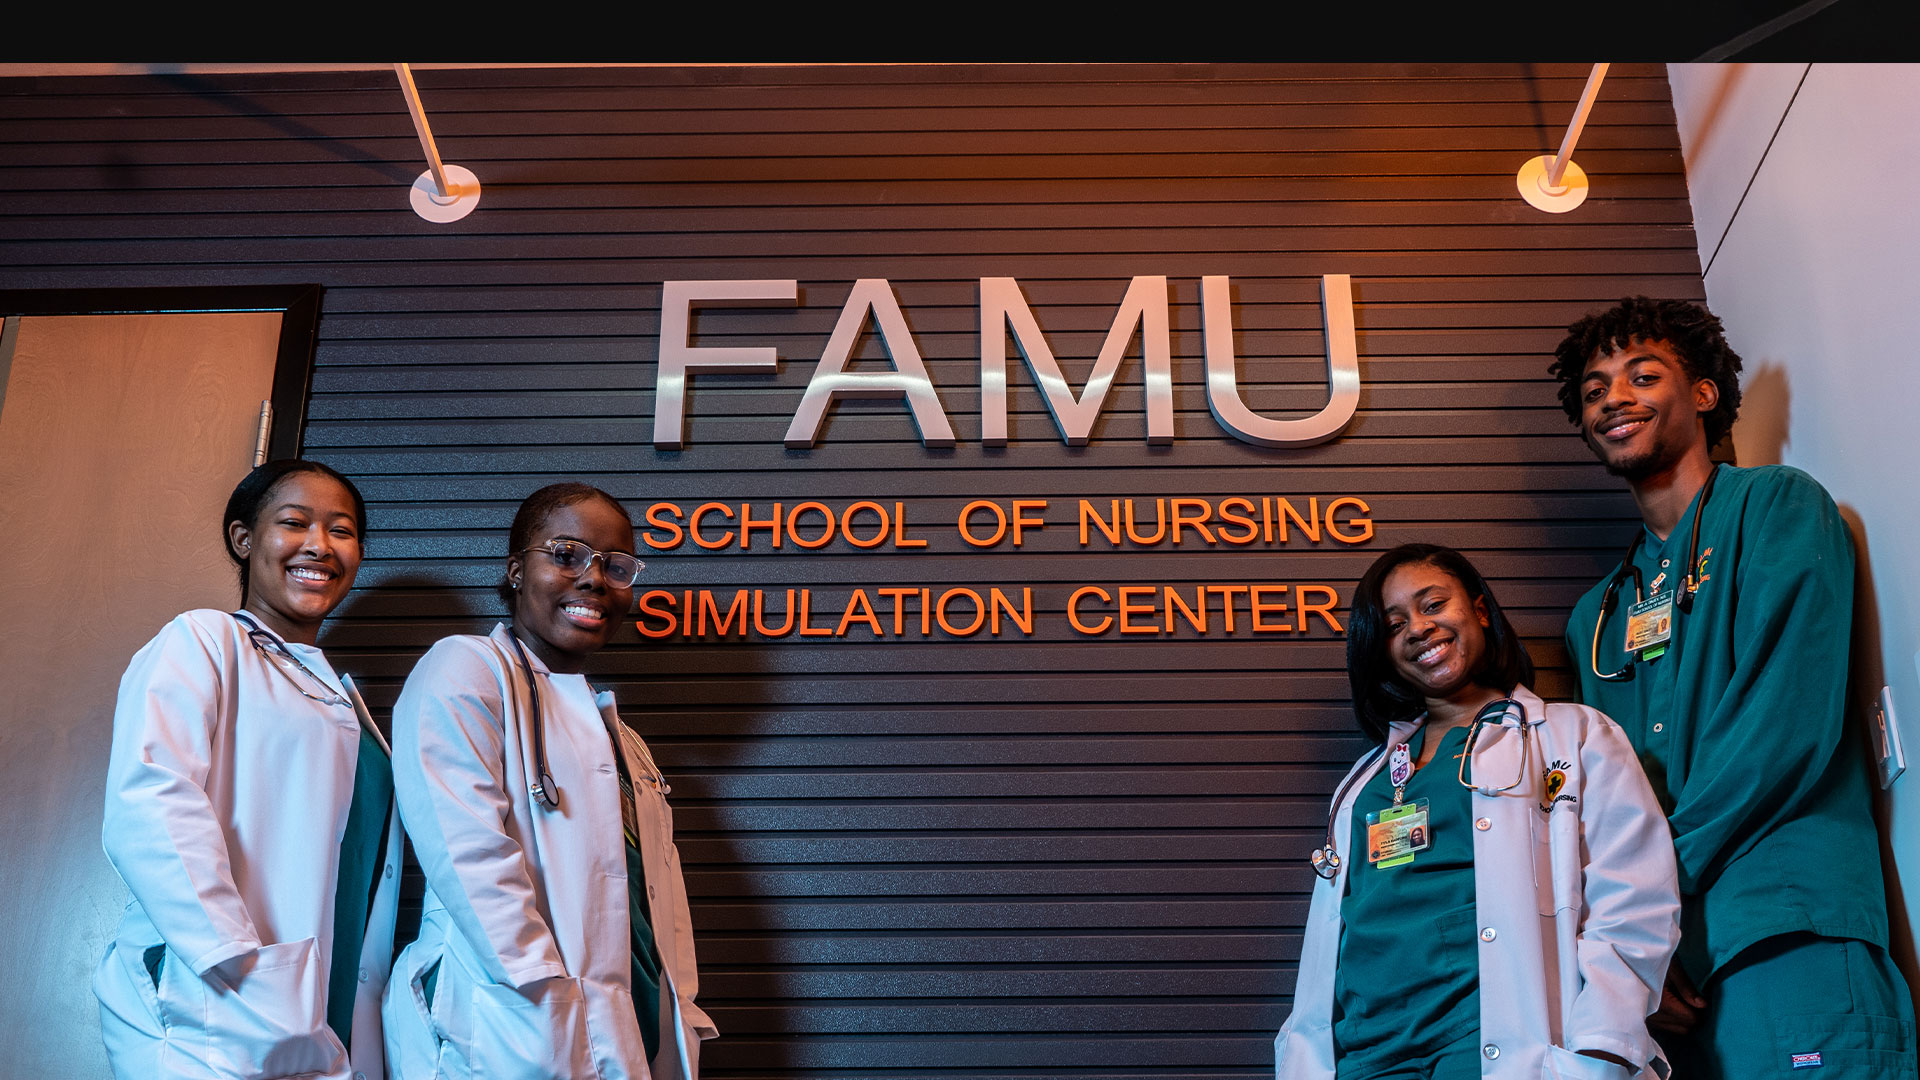 FAMU School of Nursing Simulation Center